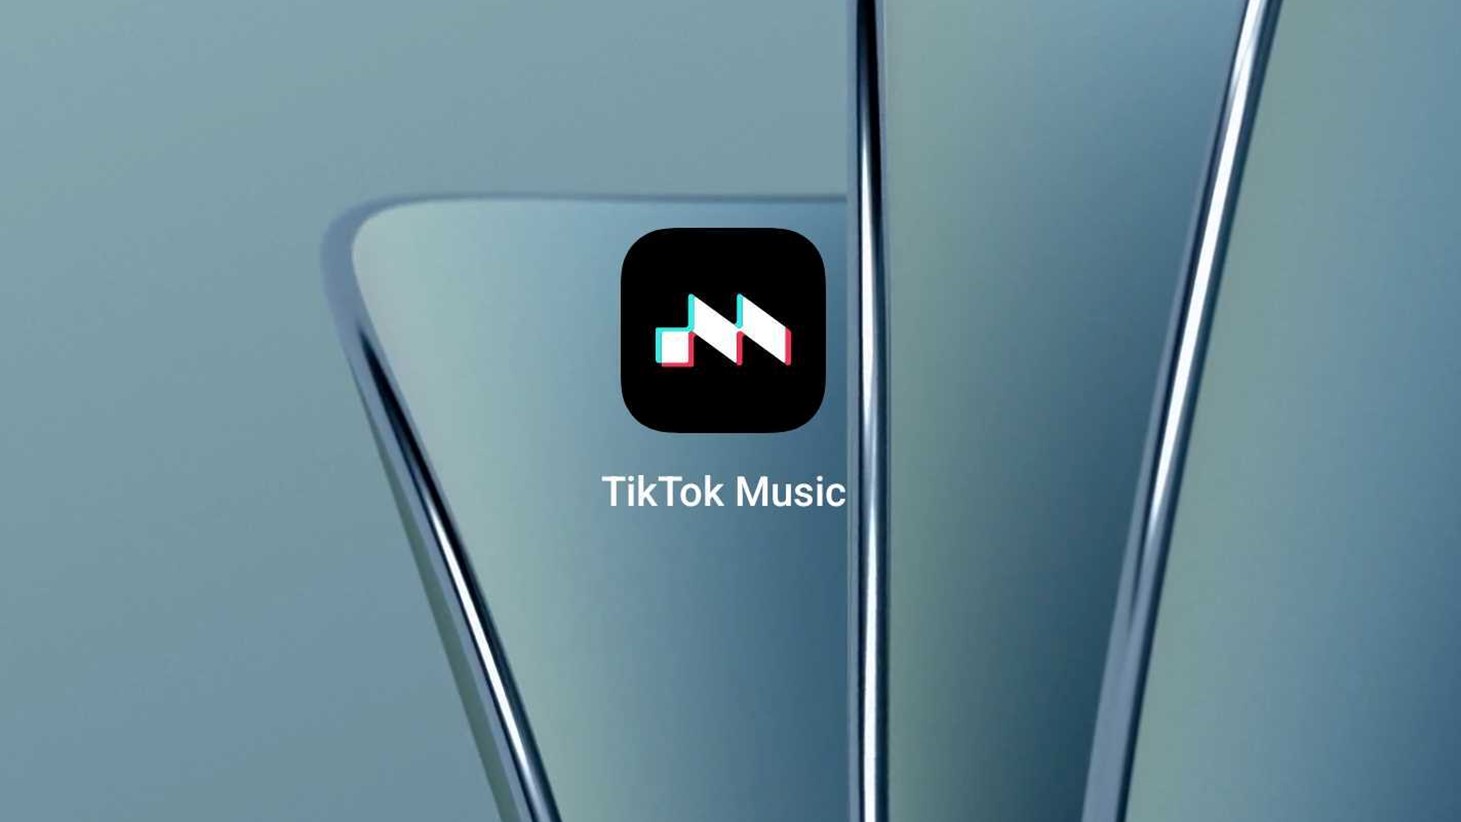 TikTok Music App on Mobile